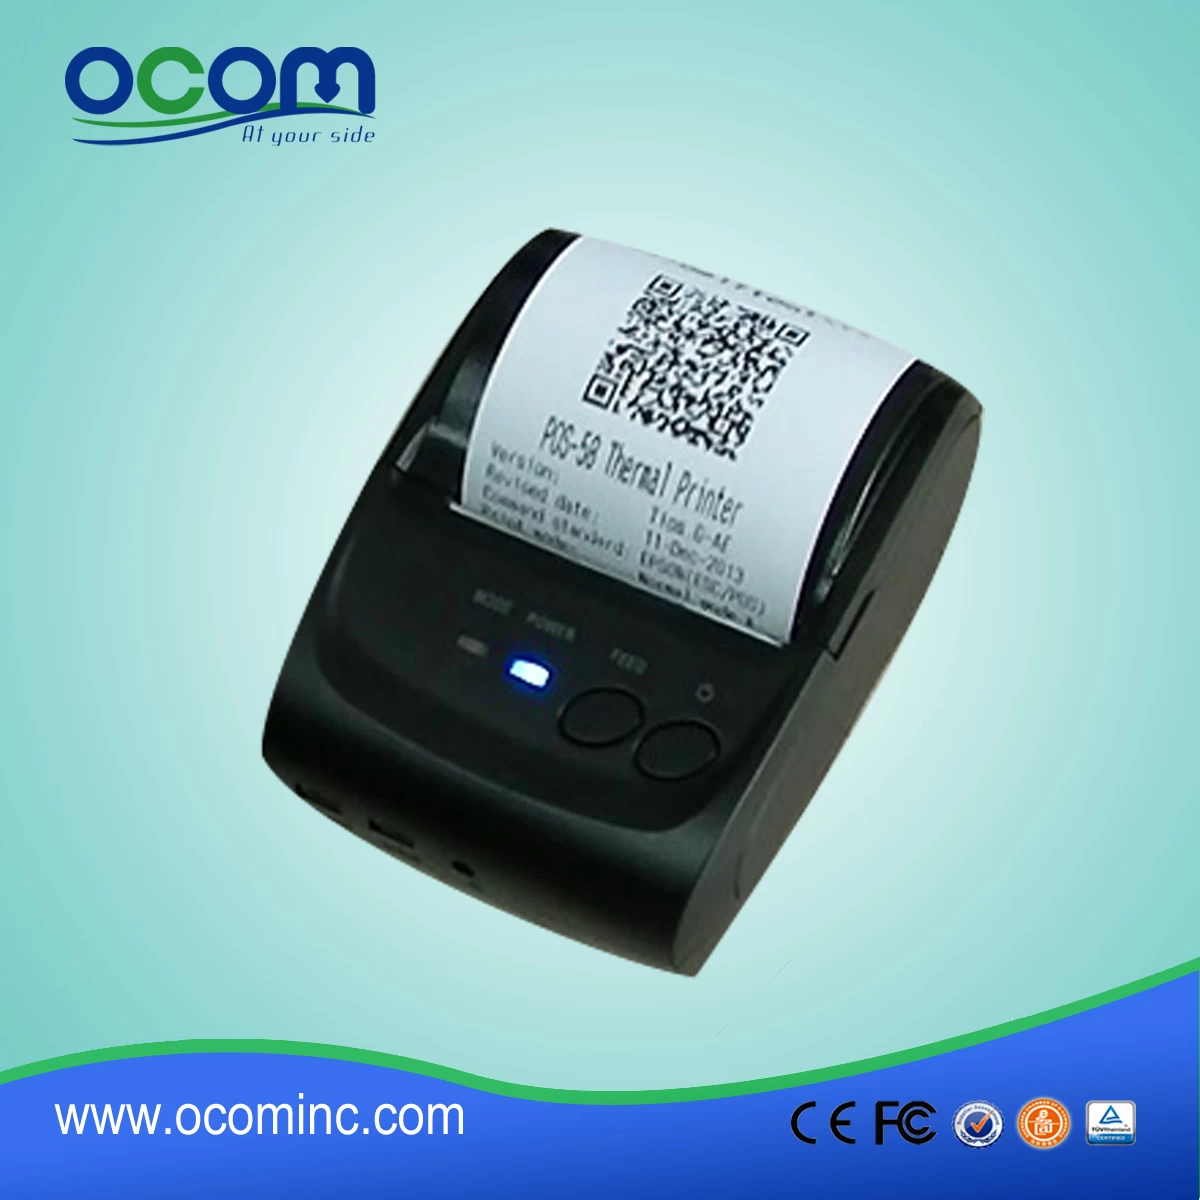 New Mobile Bluetooth Thermal Printer OCPP- M05